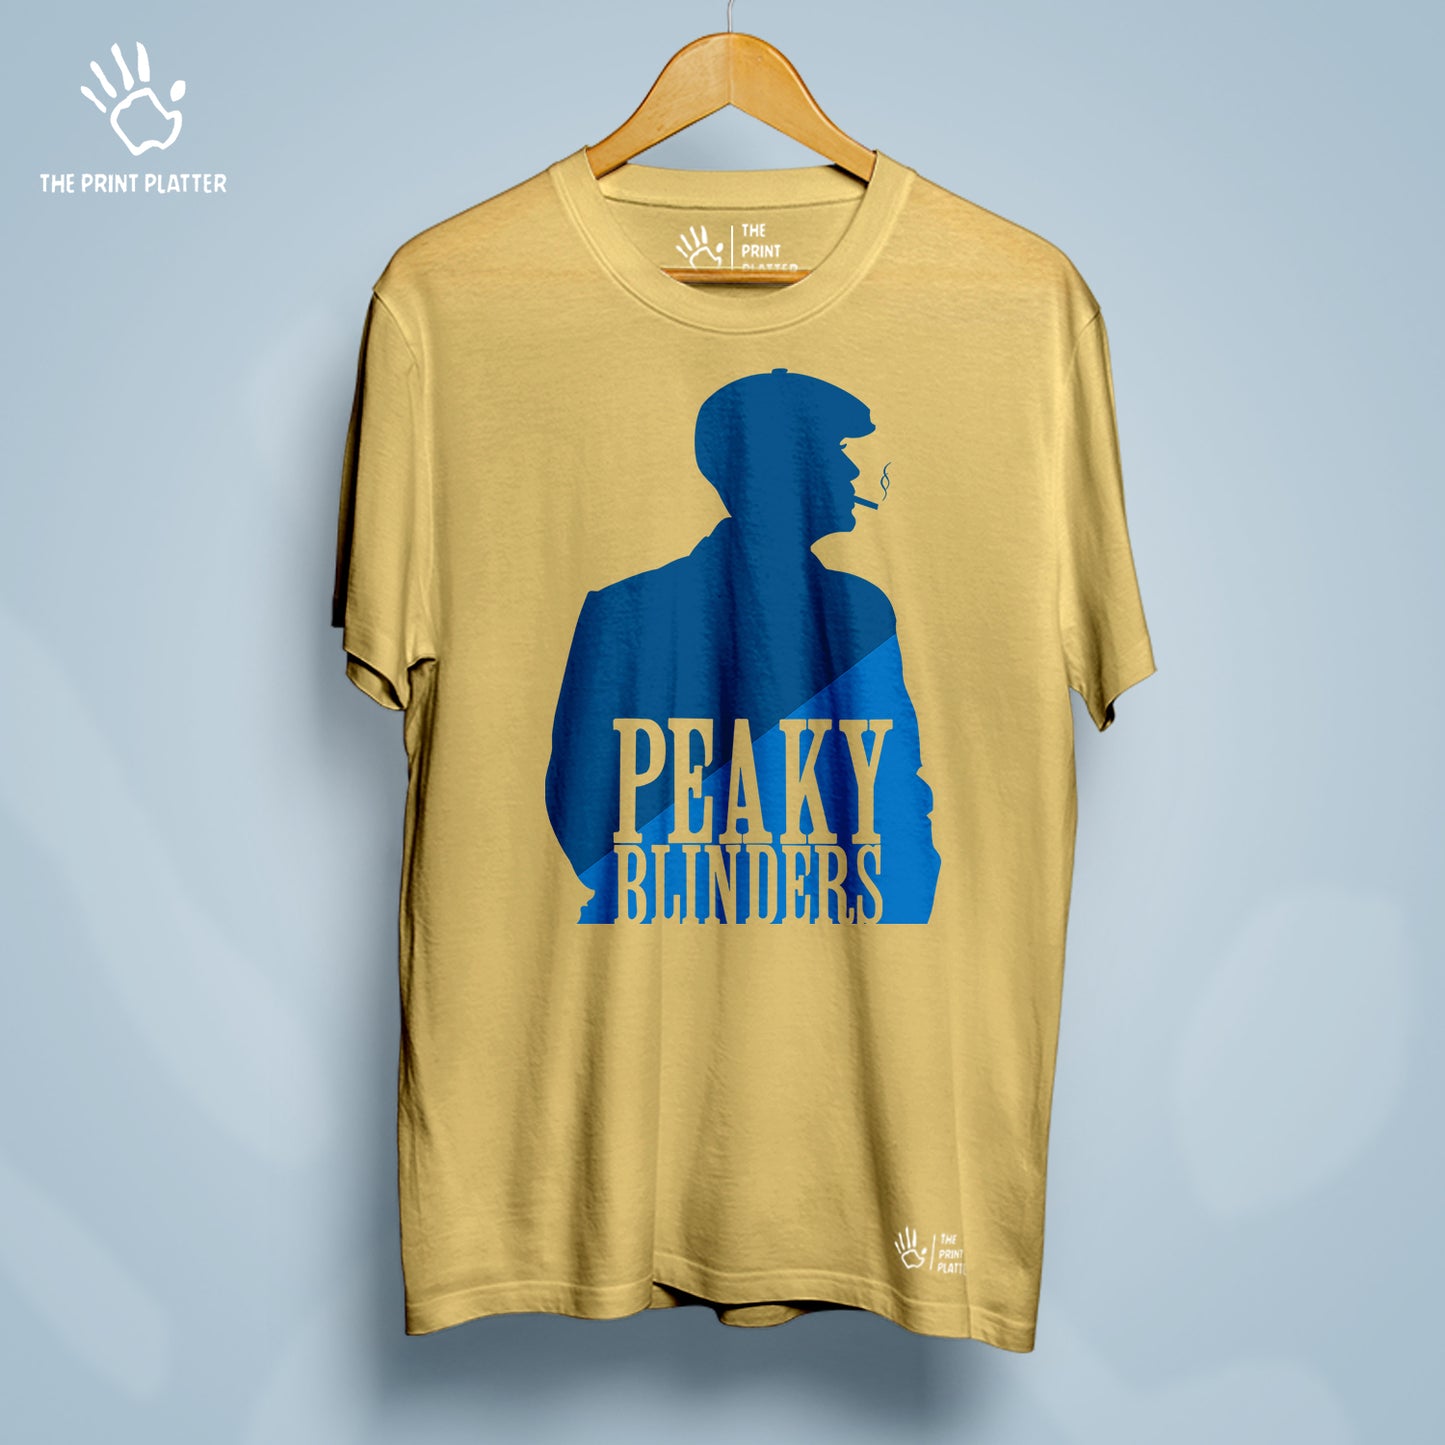 Peaky Blinders Cotton Bio Wash 180gsm T-shirt | T-R86